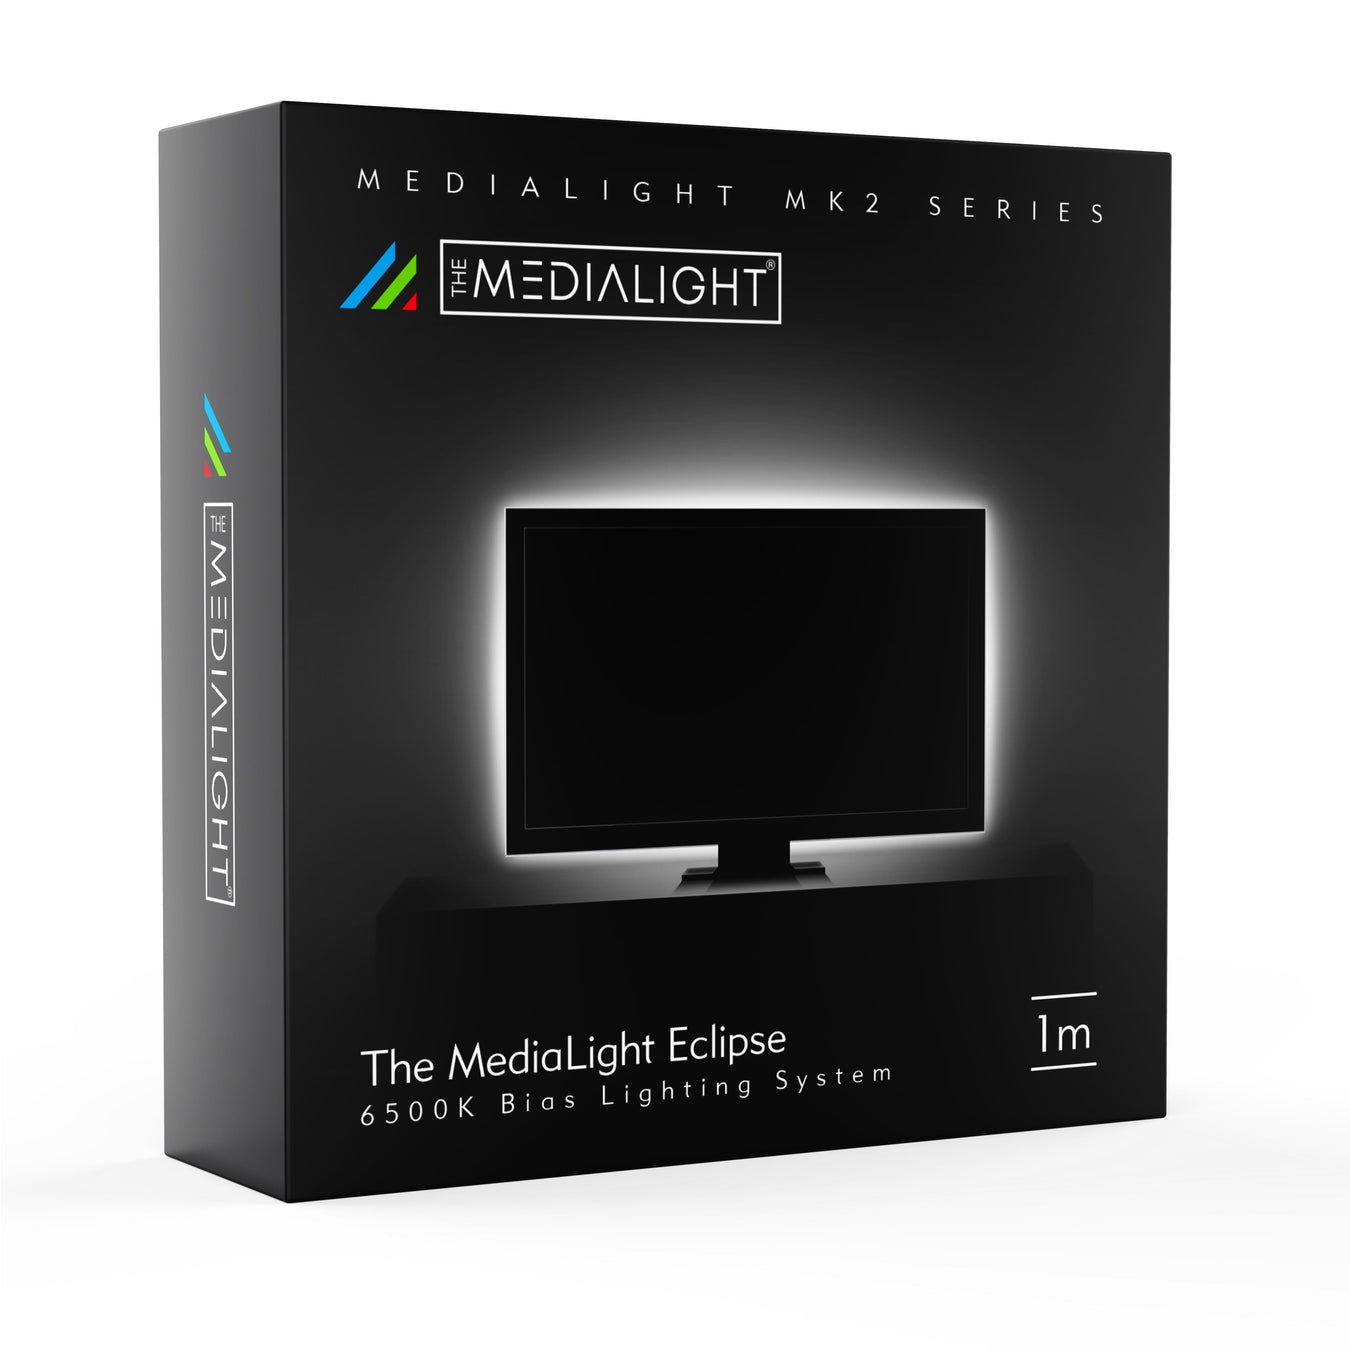 The MediaLight Mk2 Series